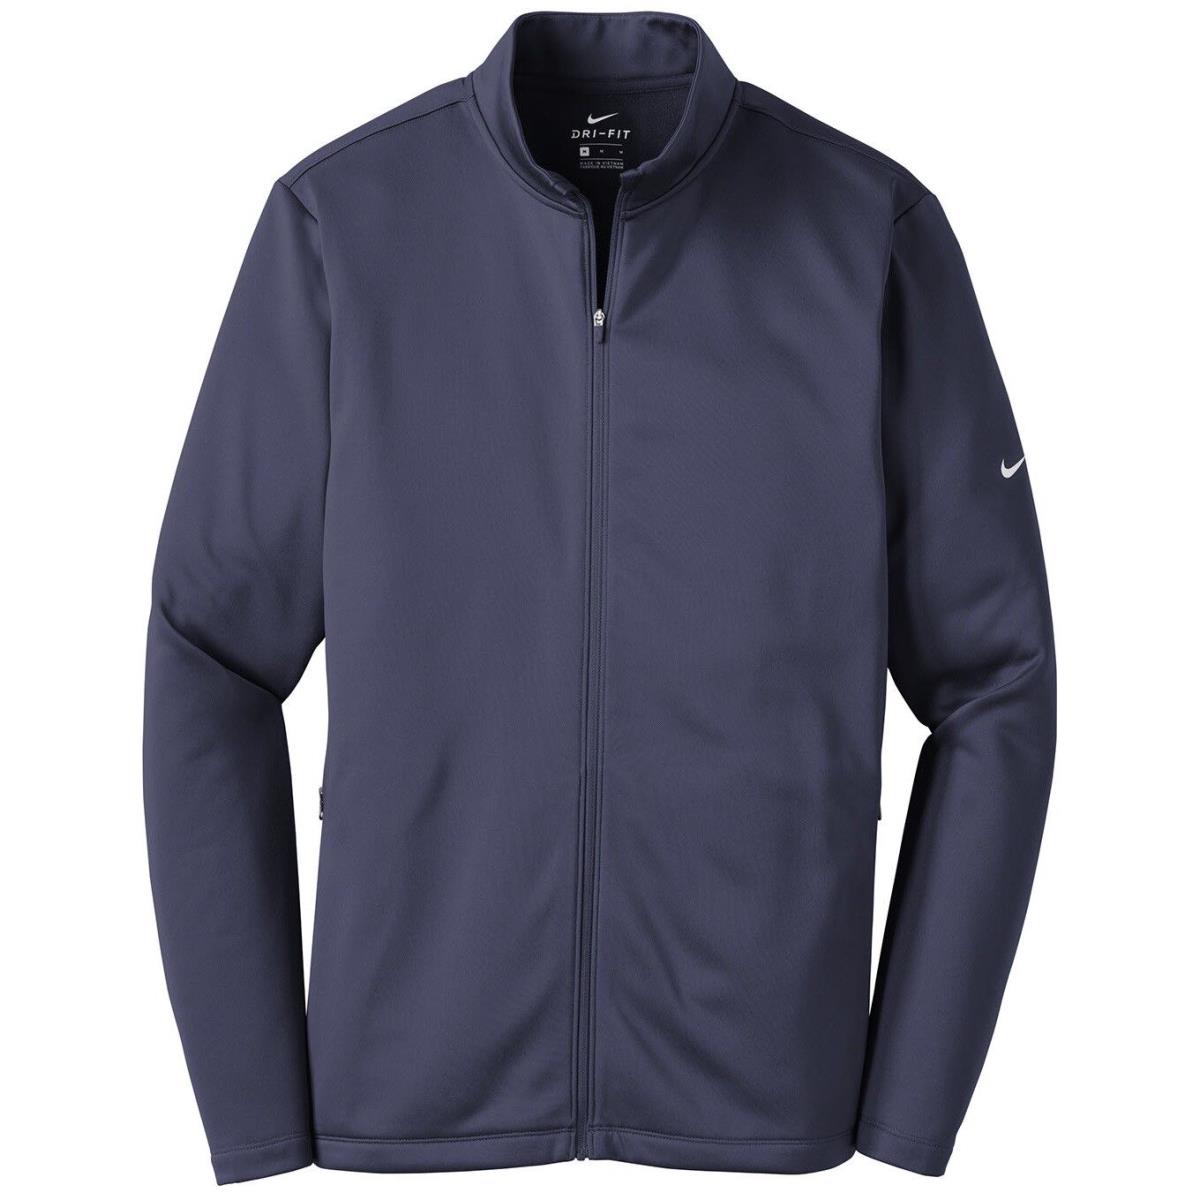 Men`s Nike Therma Fit Moisture Wicking Fleece Full Fip Jacket Pockets XS-4XL Midnight Navy Blue